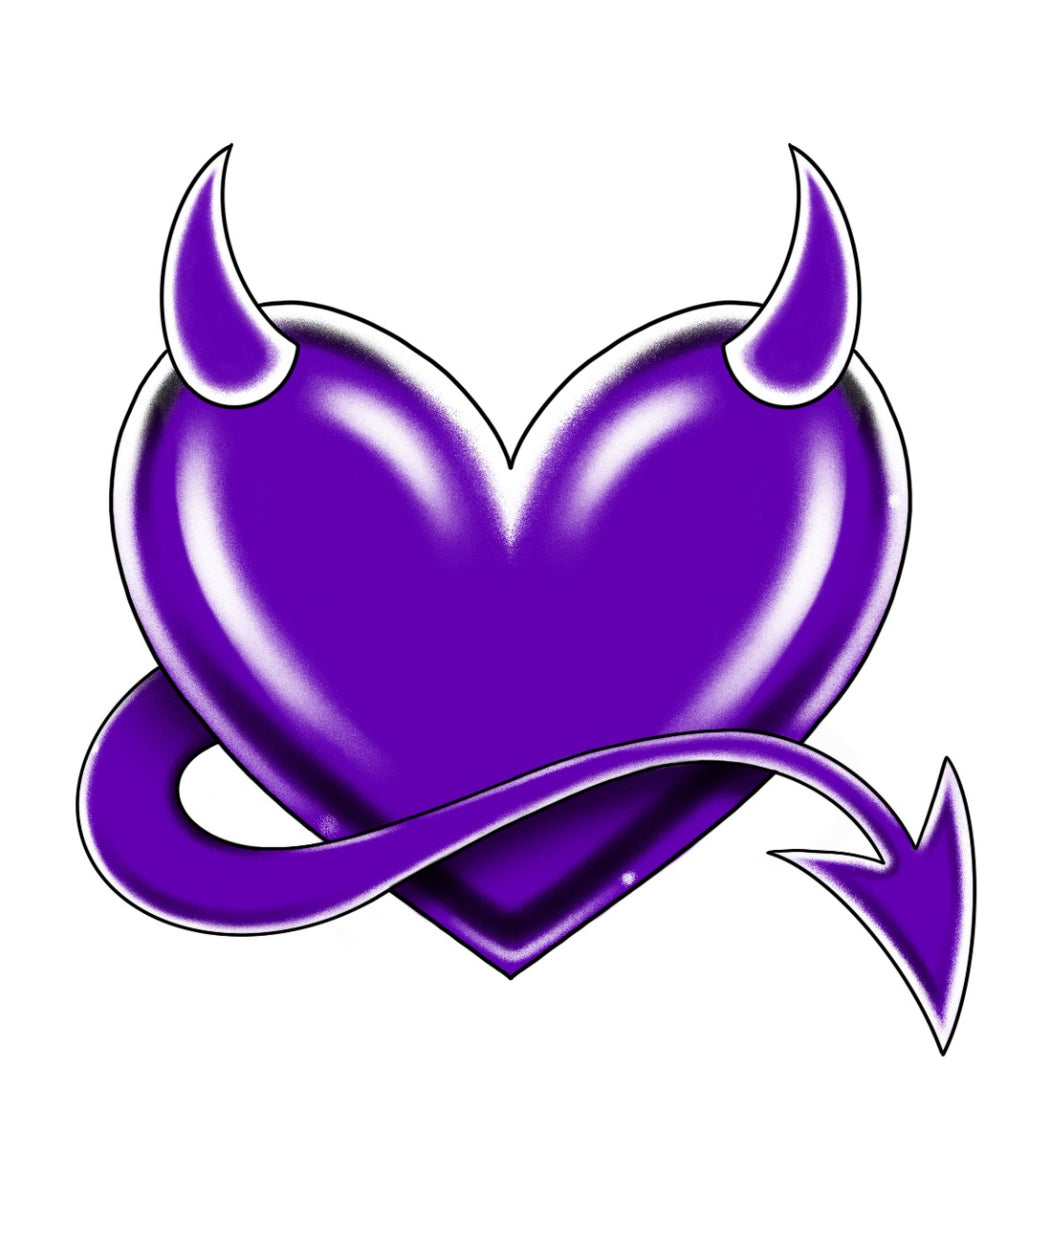 Purple Heart - Dimensions - 2